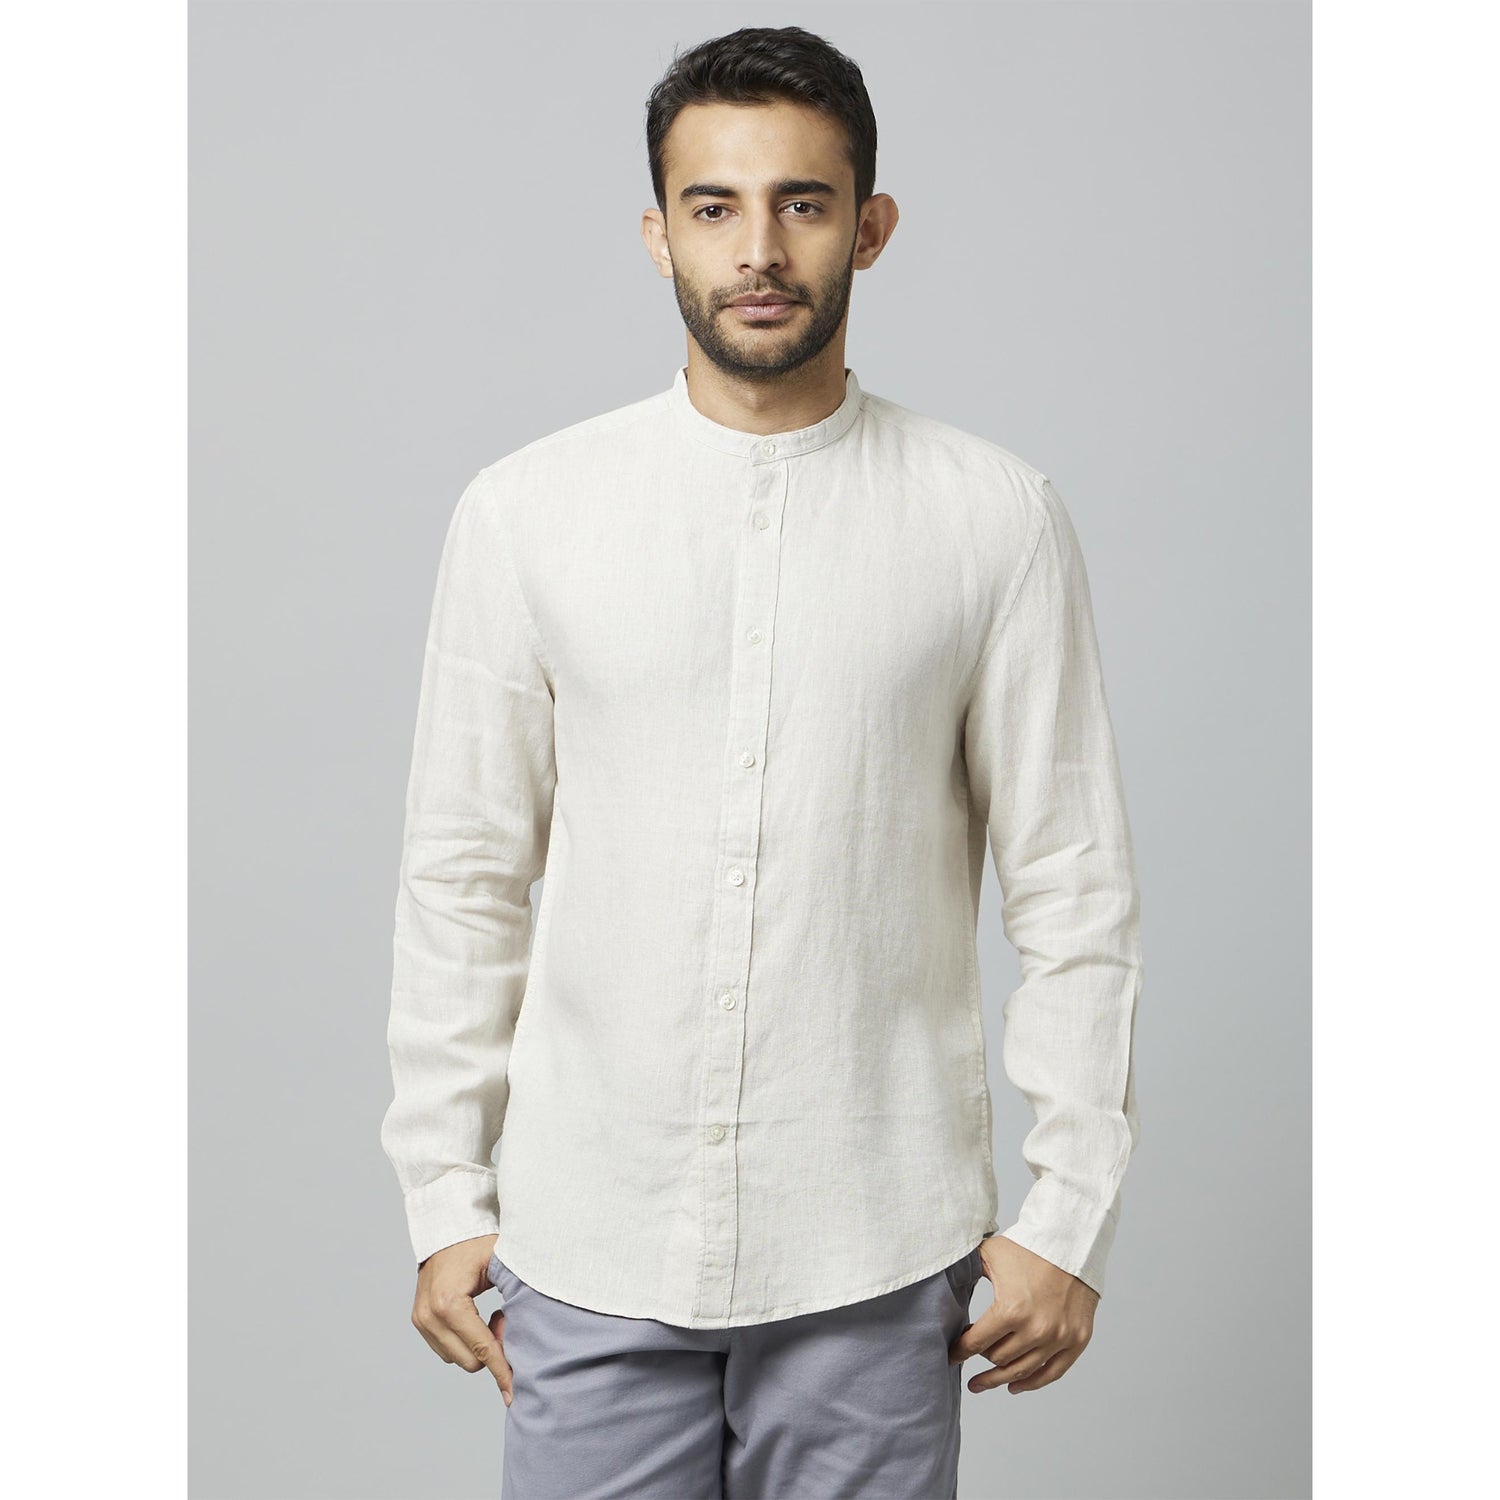 Off White Classic Mandarin Collar Linen Casual Shirt (DAMAOLIN)